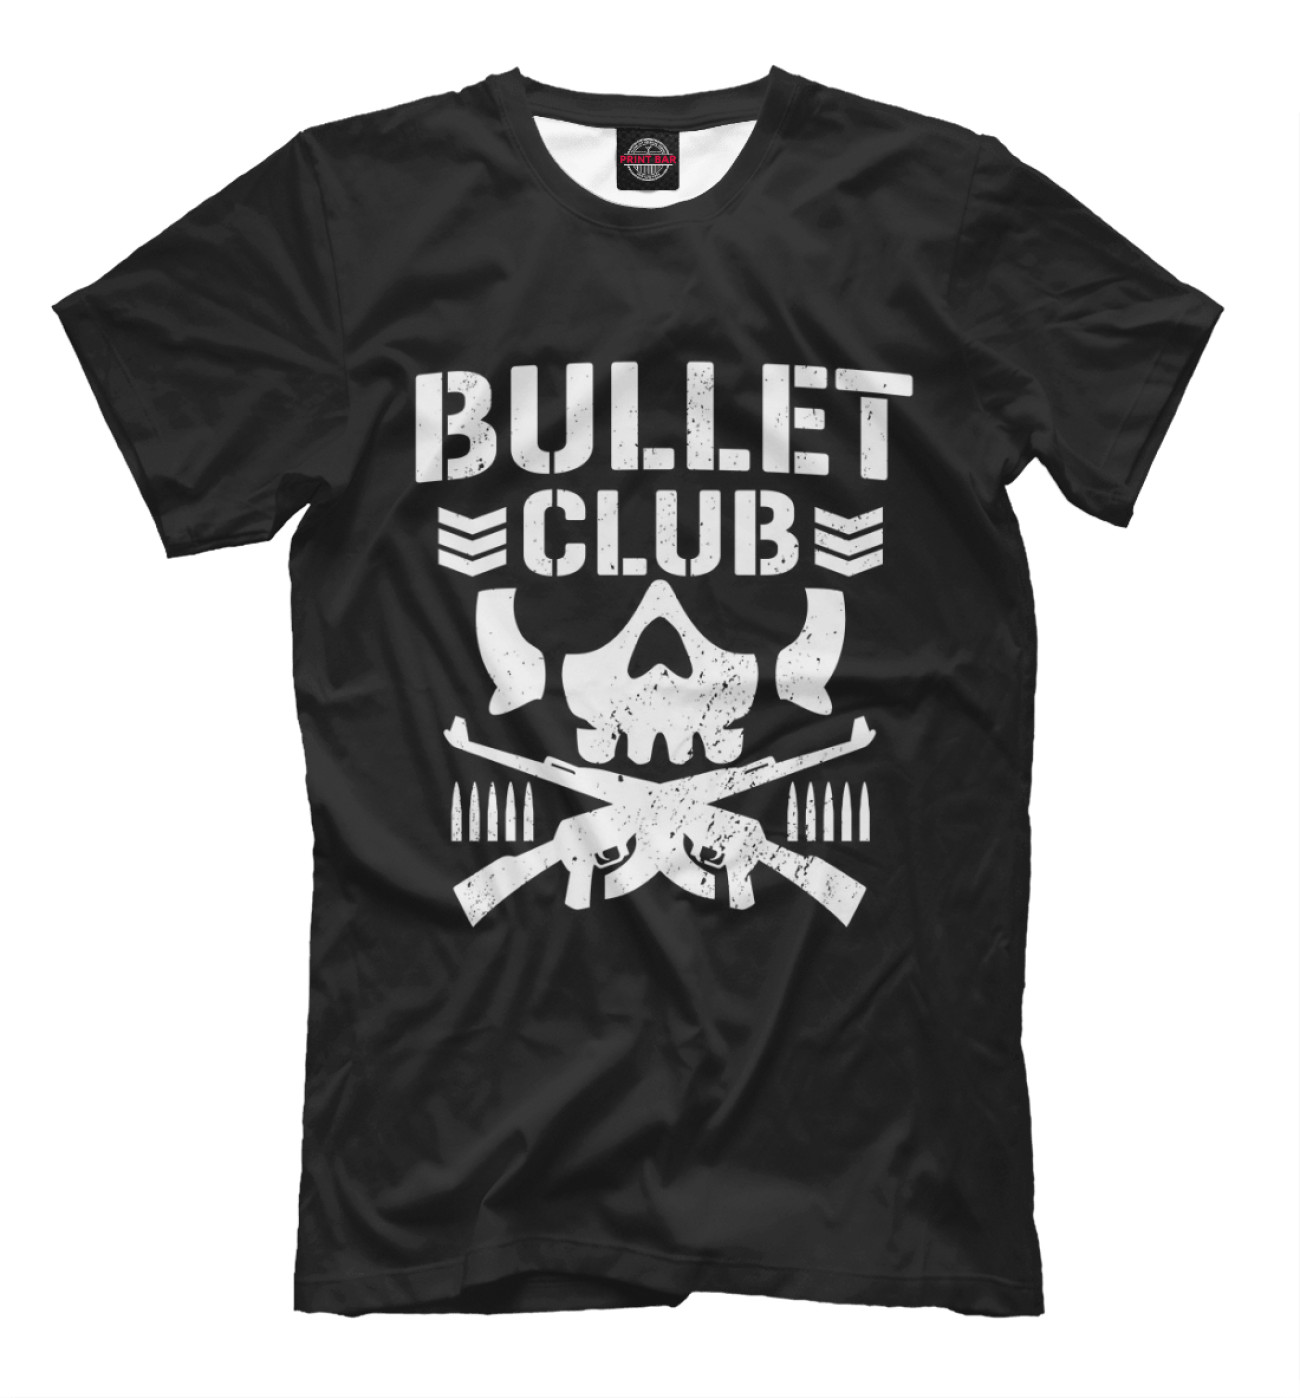 Мужская Футболка Bullet Club, артикул: WWE-373696-fut-2